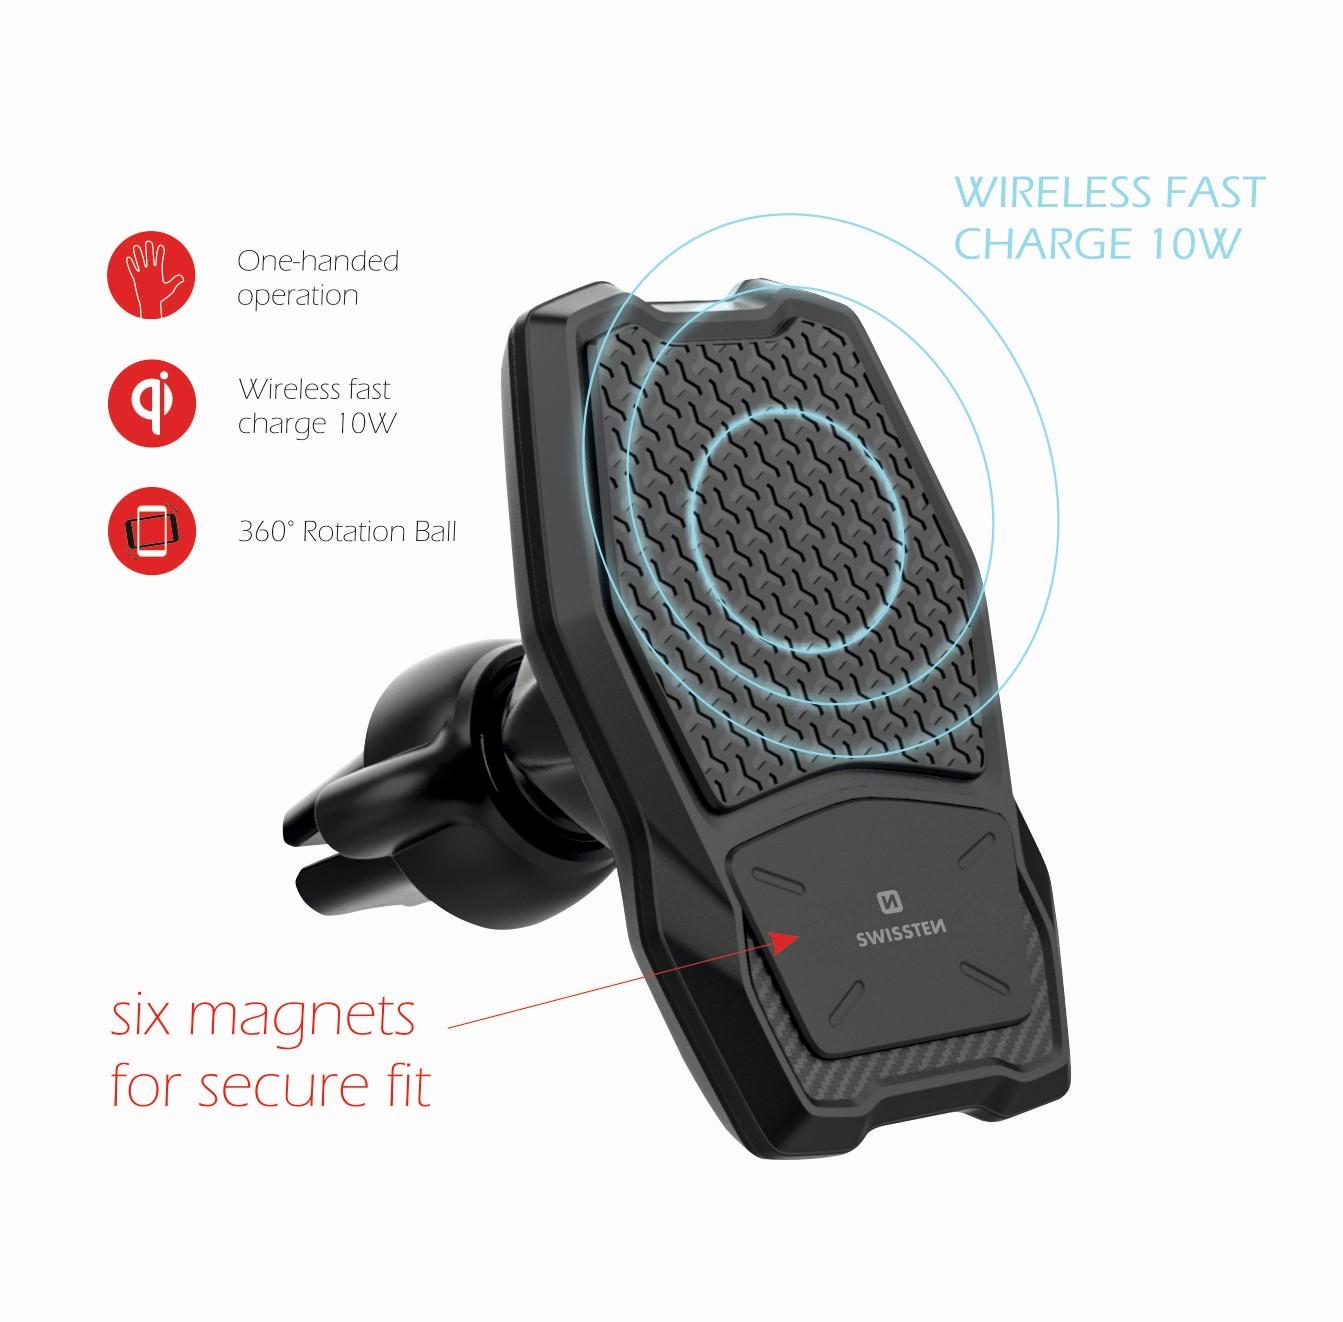  Swissten suport auto magnetic cu incarcare wireless WM1-AV3 thumb